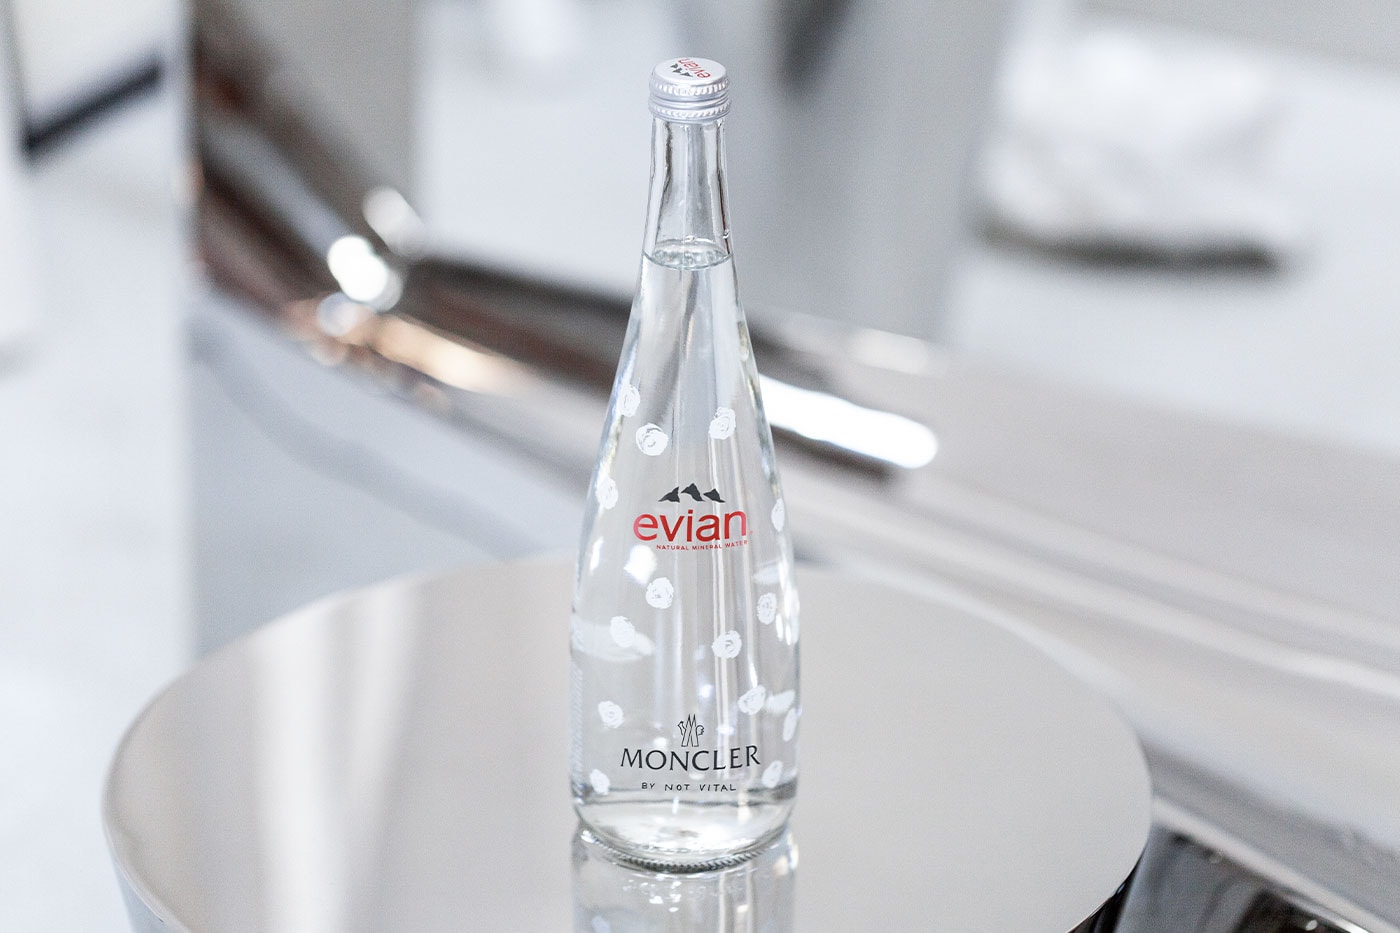 evian designer collaboration luxury brand Moncler 75cL glass bottle festive season gift genius Not Vital mineral water alpine french alps monestier de clermont selfridges release info